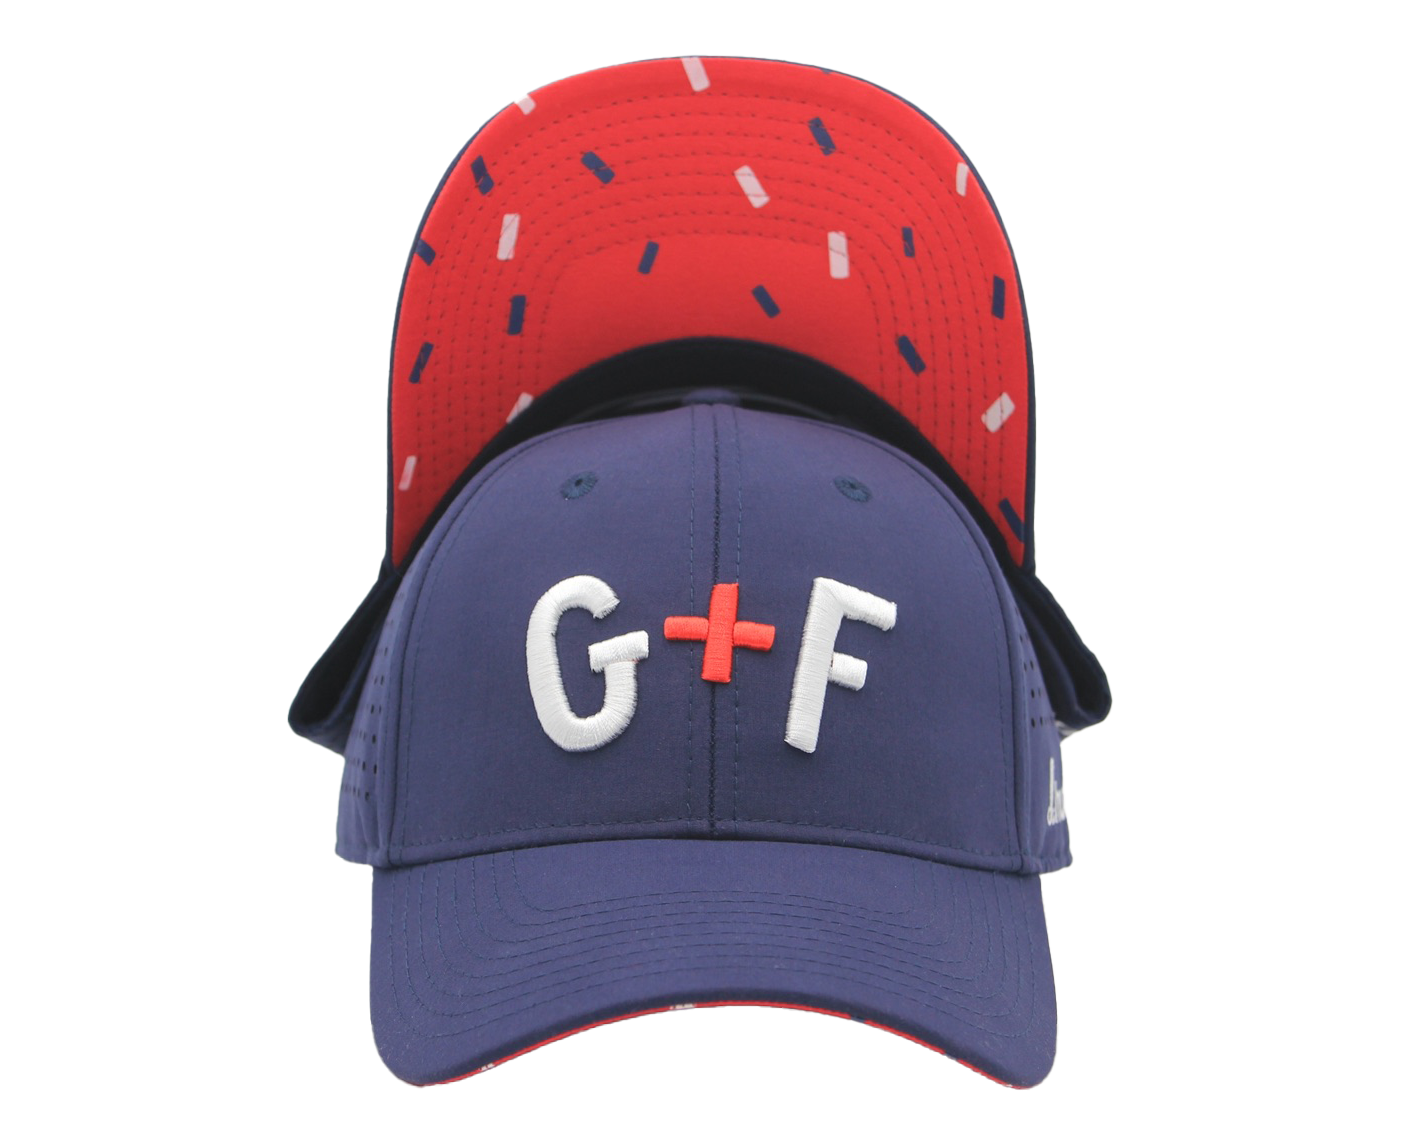 G+F Hat